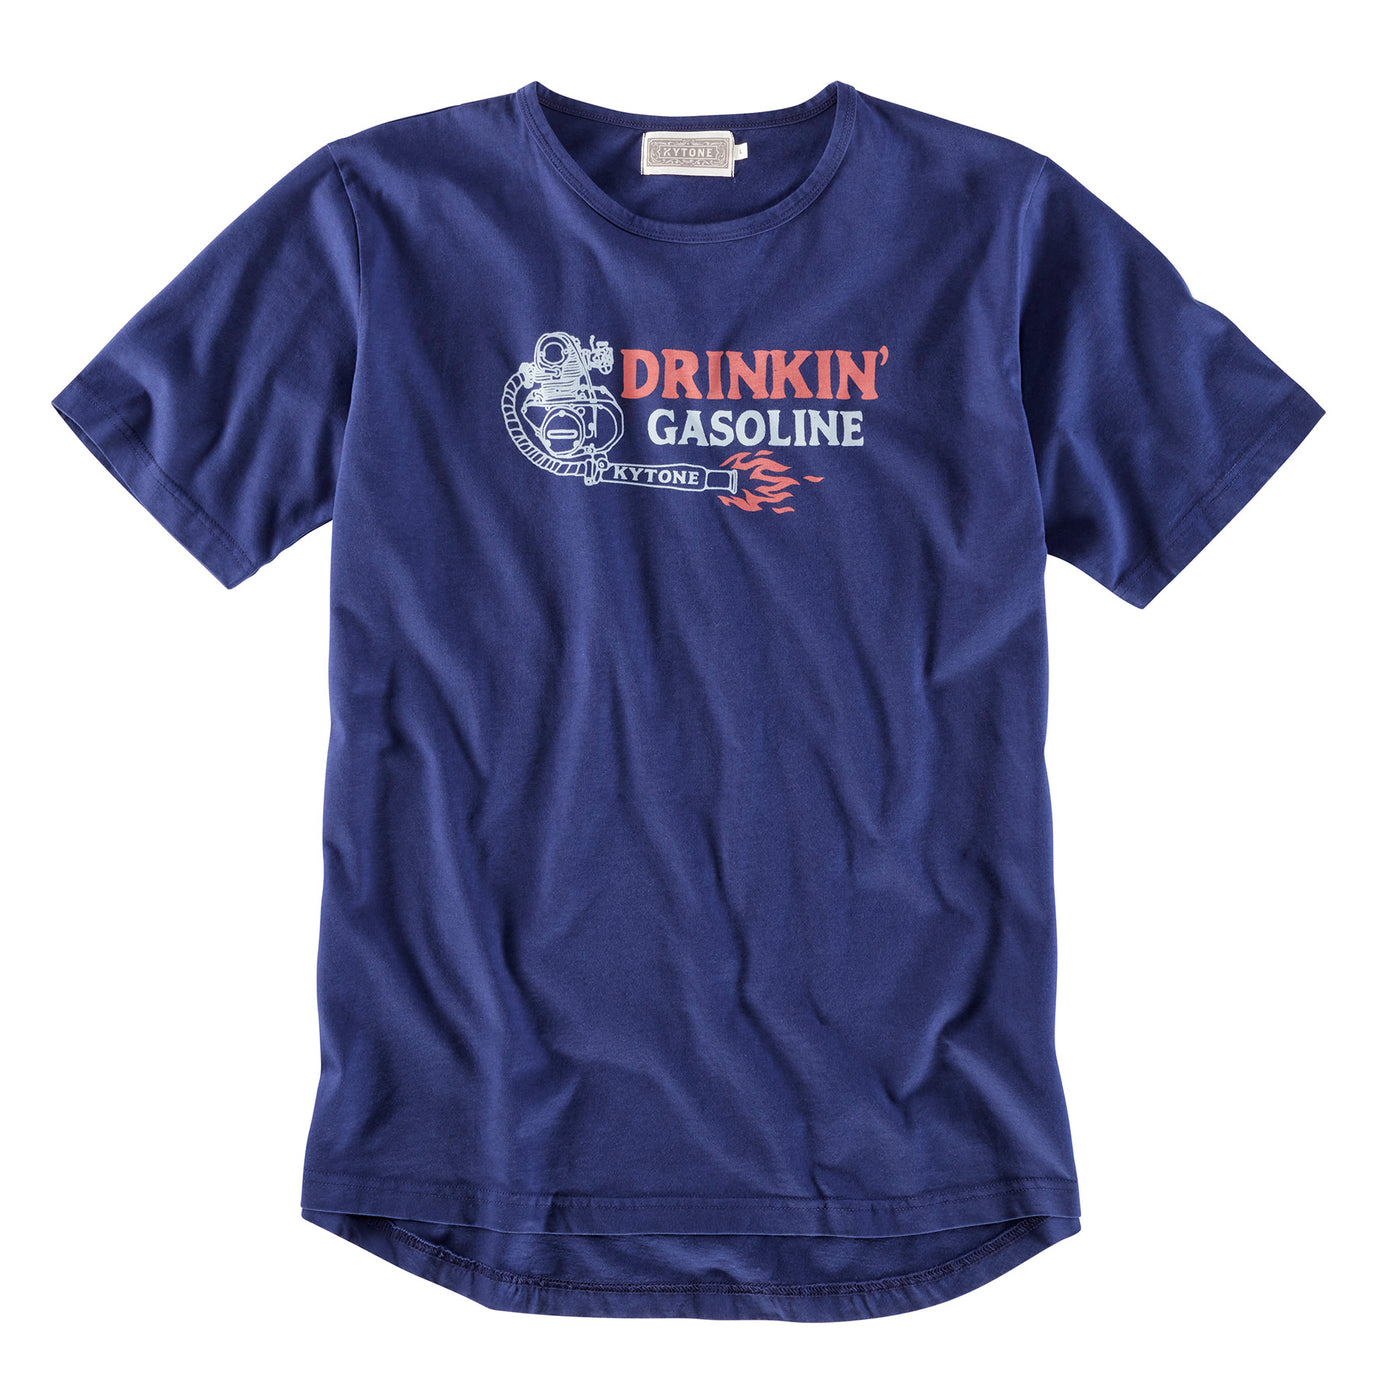 Kytone Gasoline T-Shirt